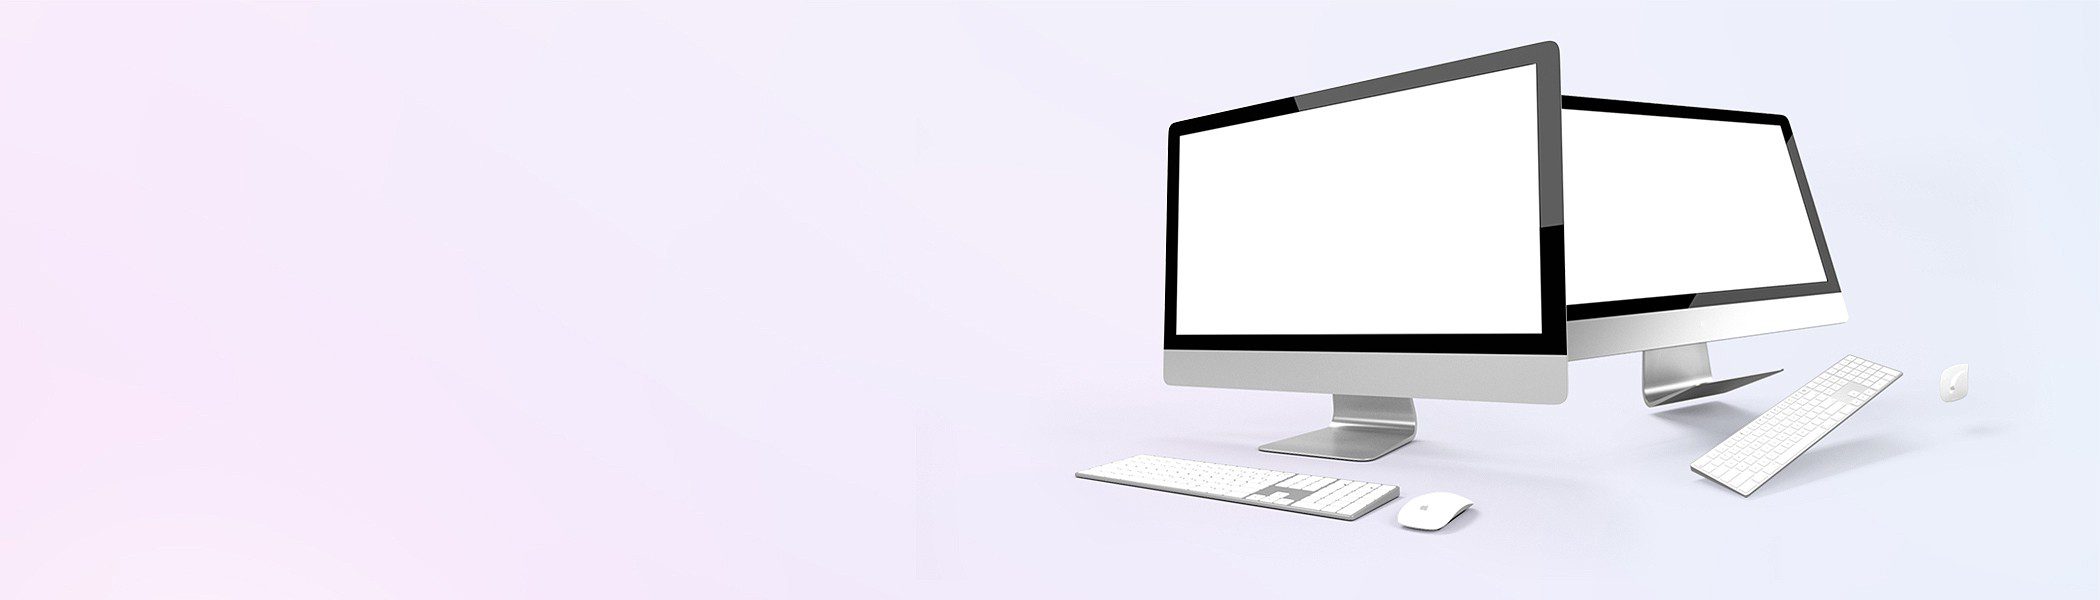 Download iMac Mockup Generator | Mediamodifier Mockups